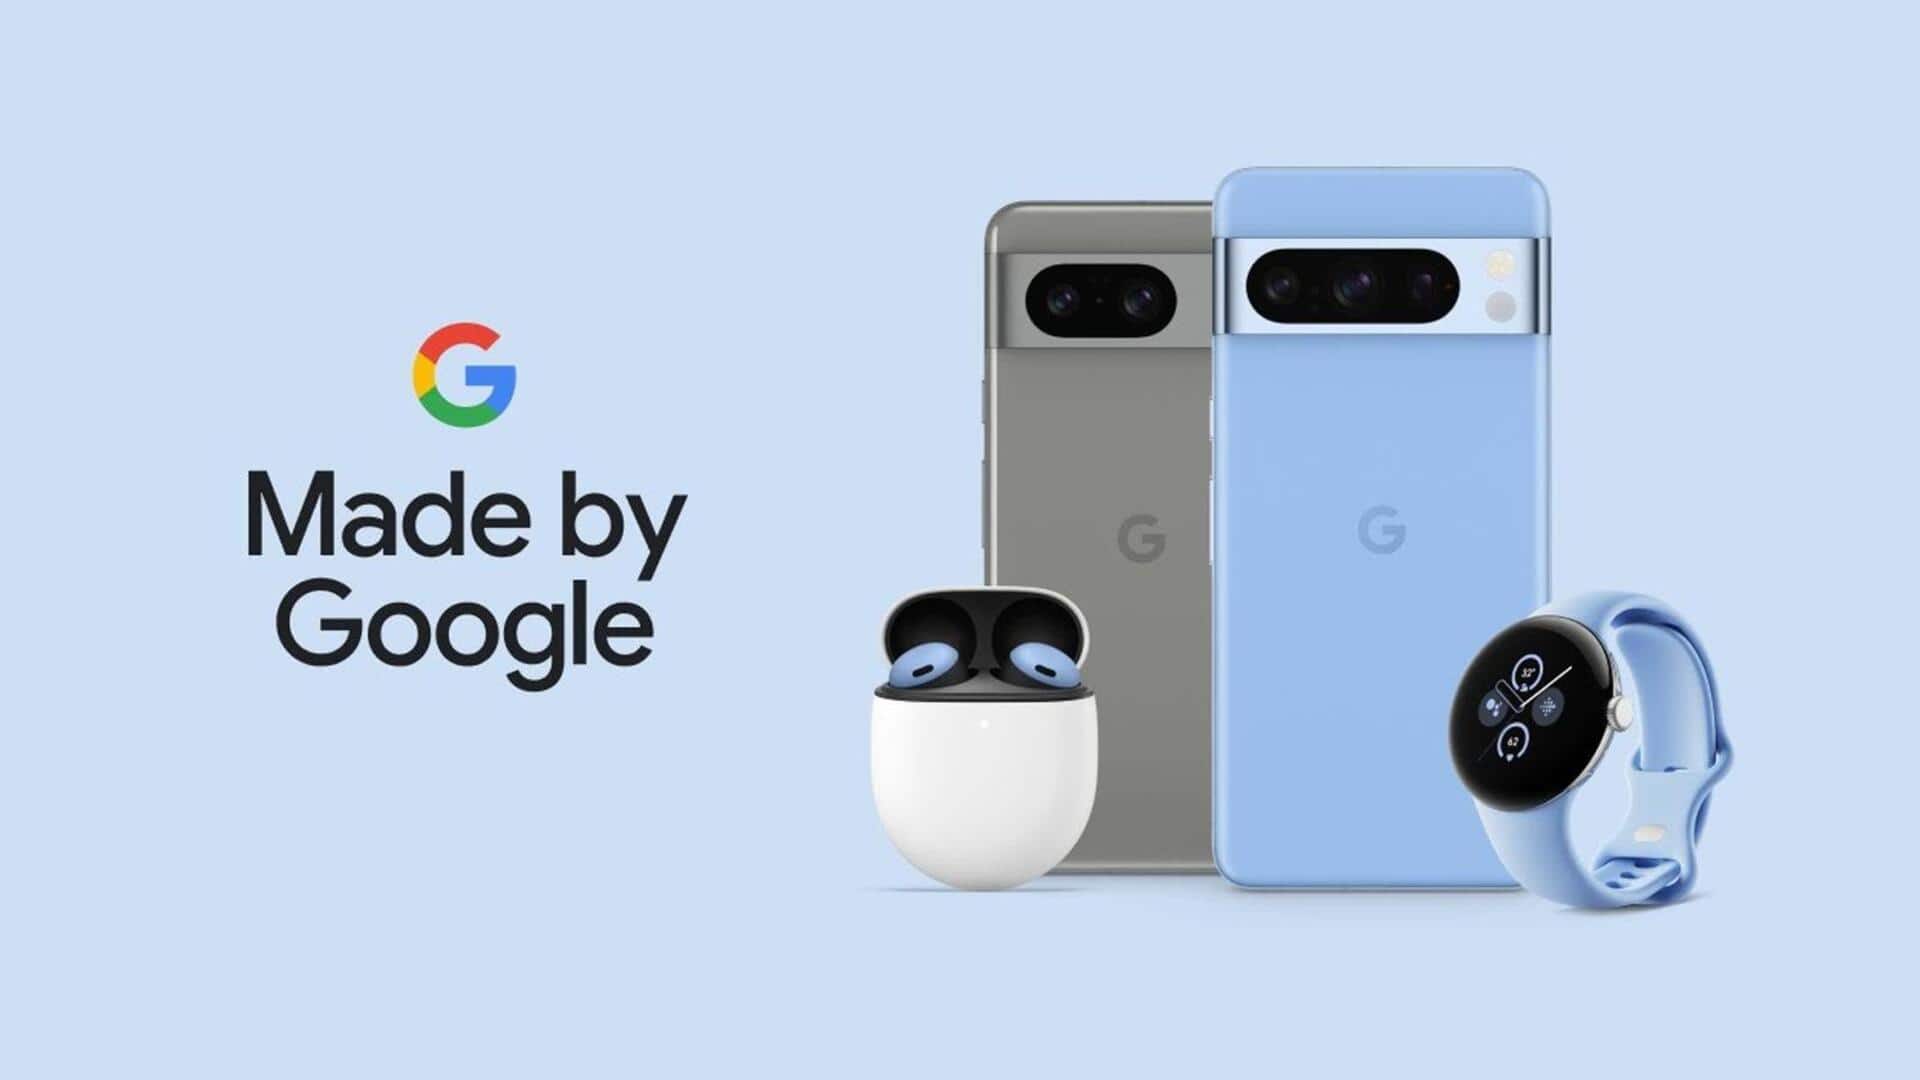 गूगल 13 अगस्त को आयोजित करेगी 'मेड बाय गूगल' कार्यक्रम, होंगी ये घोषणाएं